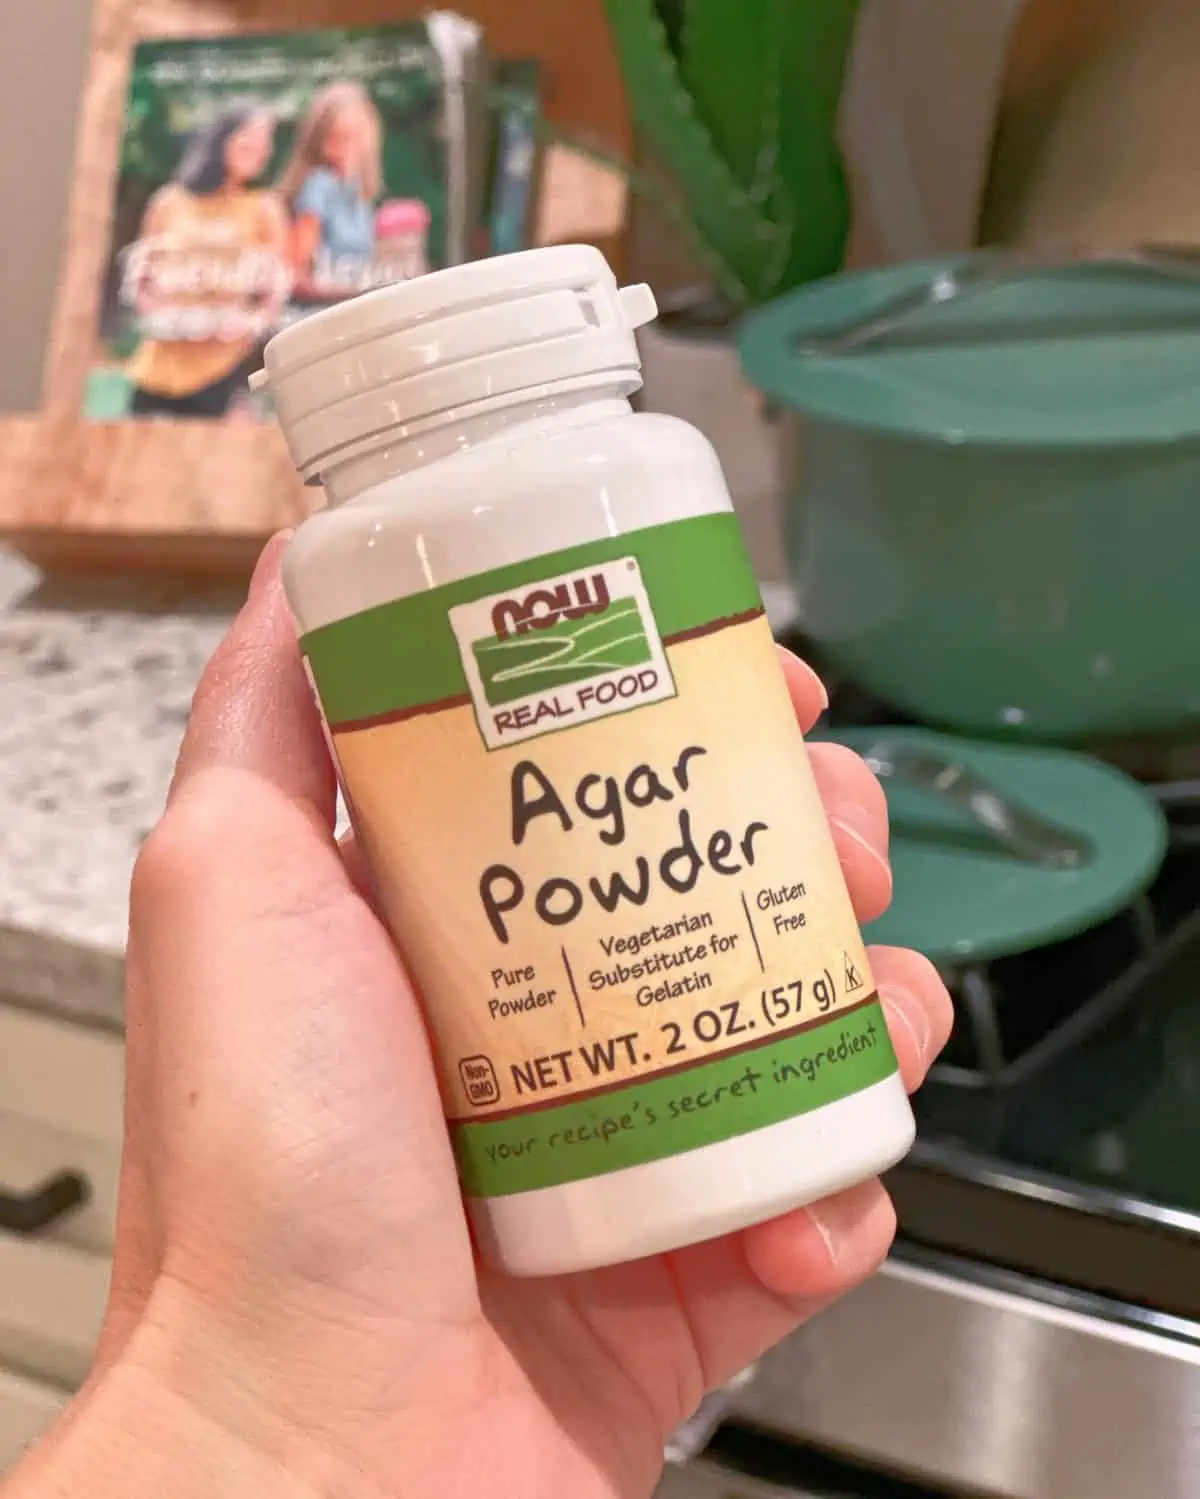 Bottle of agar agar powder vegetarian substitute for gelatin from Now Foods.